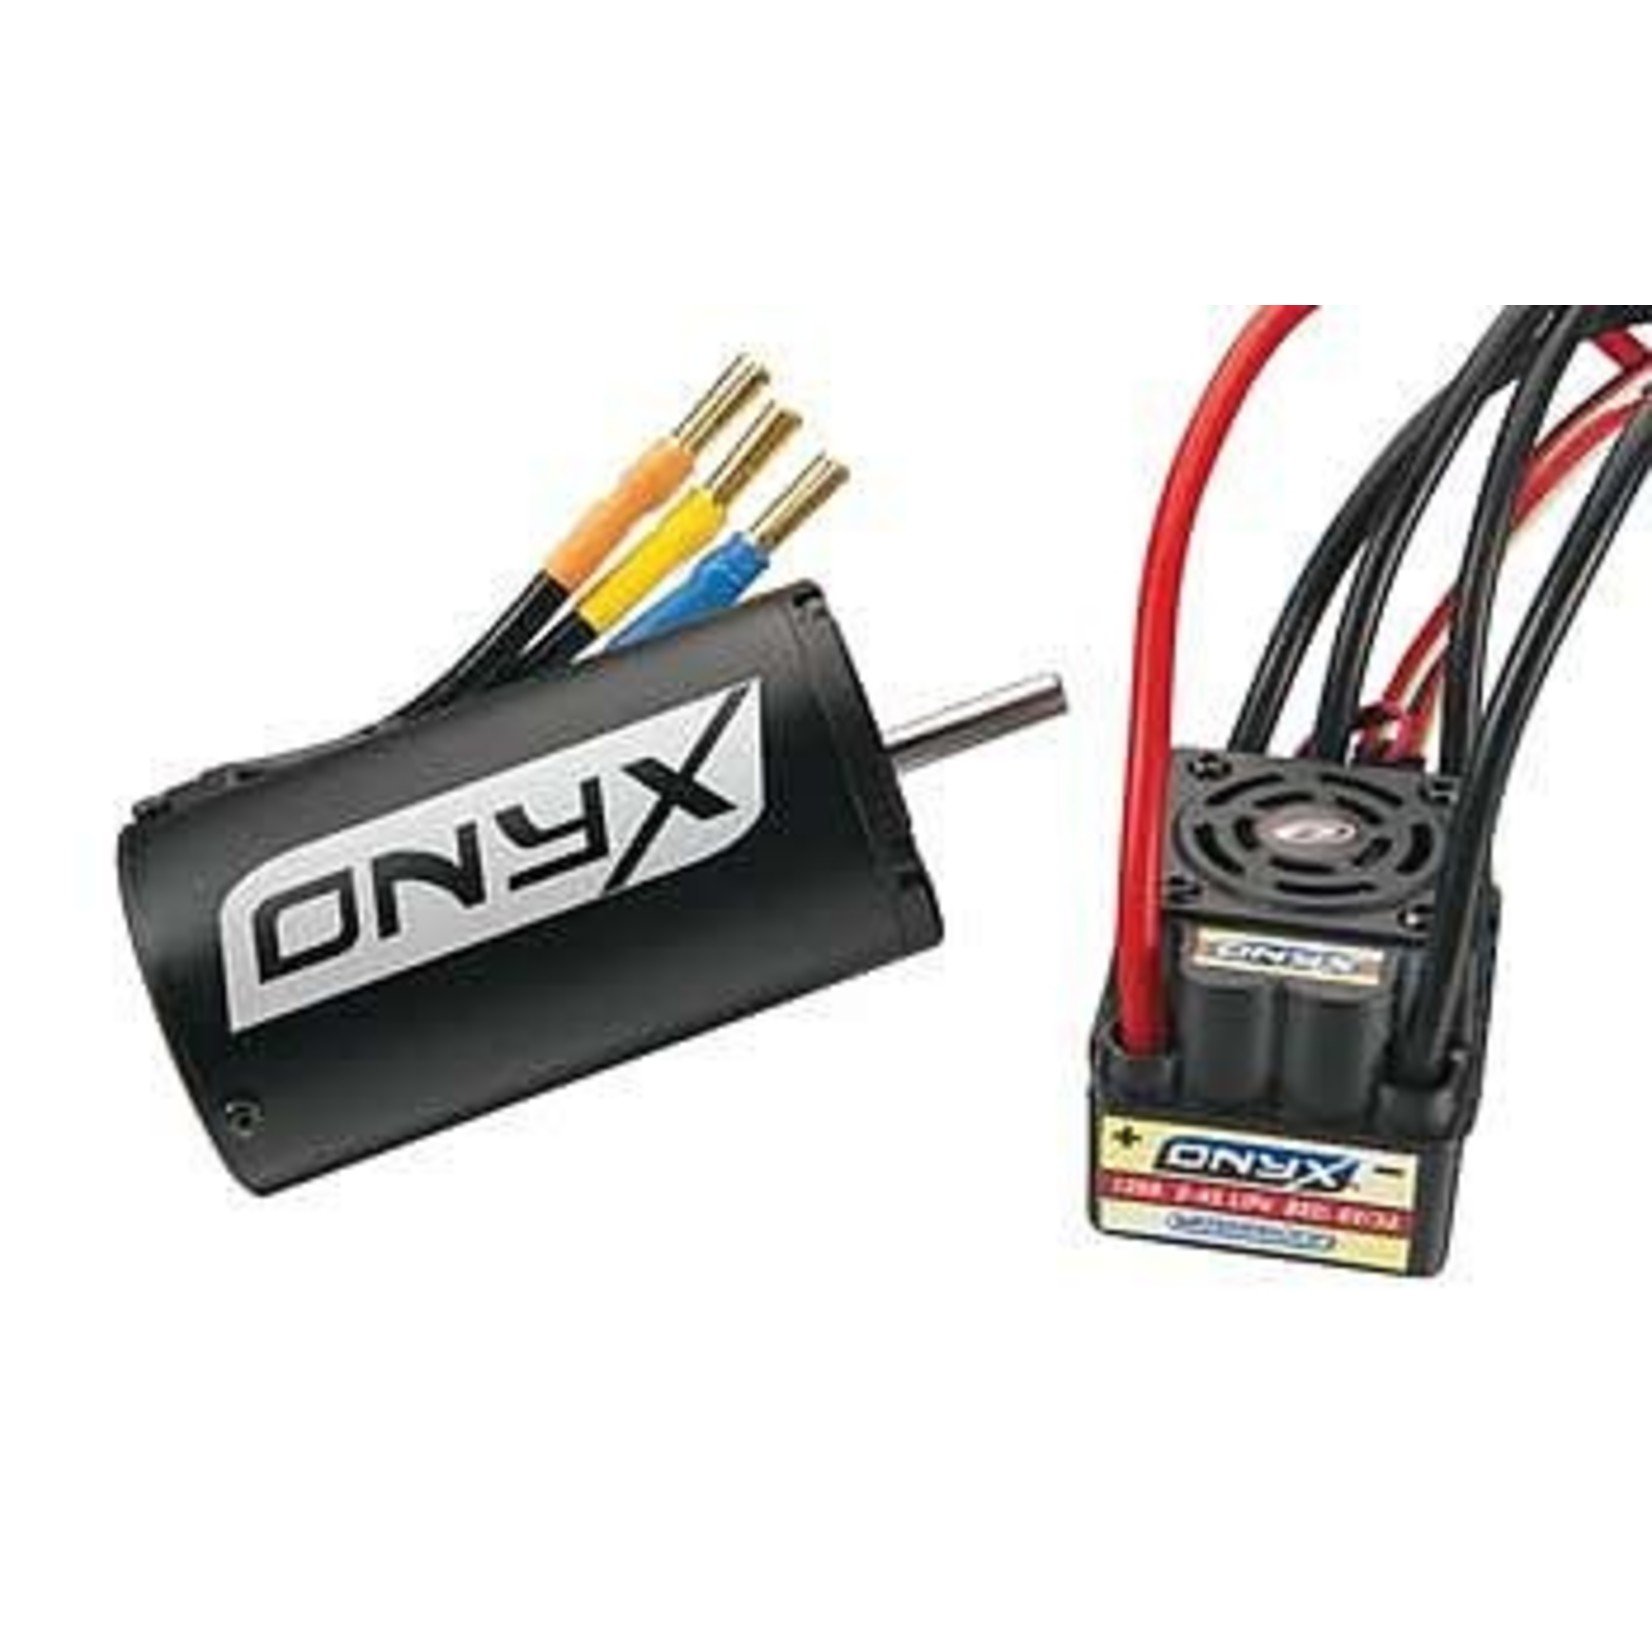 Duratrax Onyx 1/8 120A ESC / 2650kV Brushless System